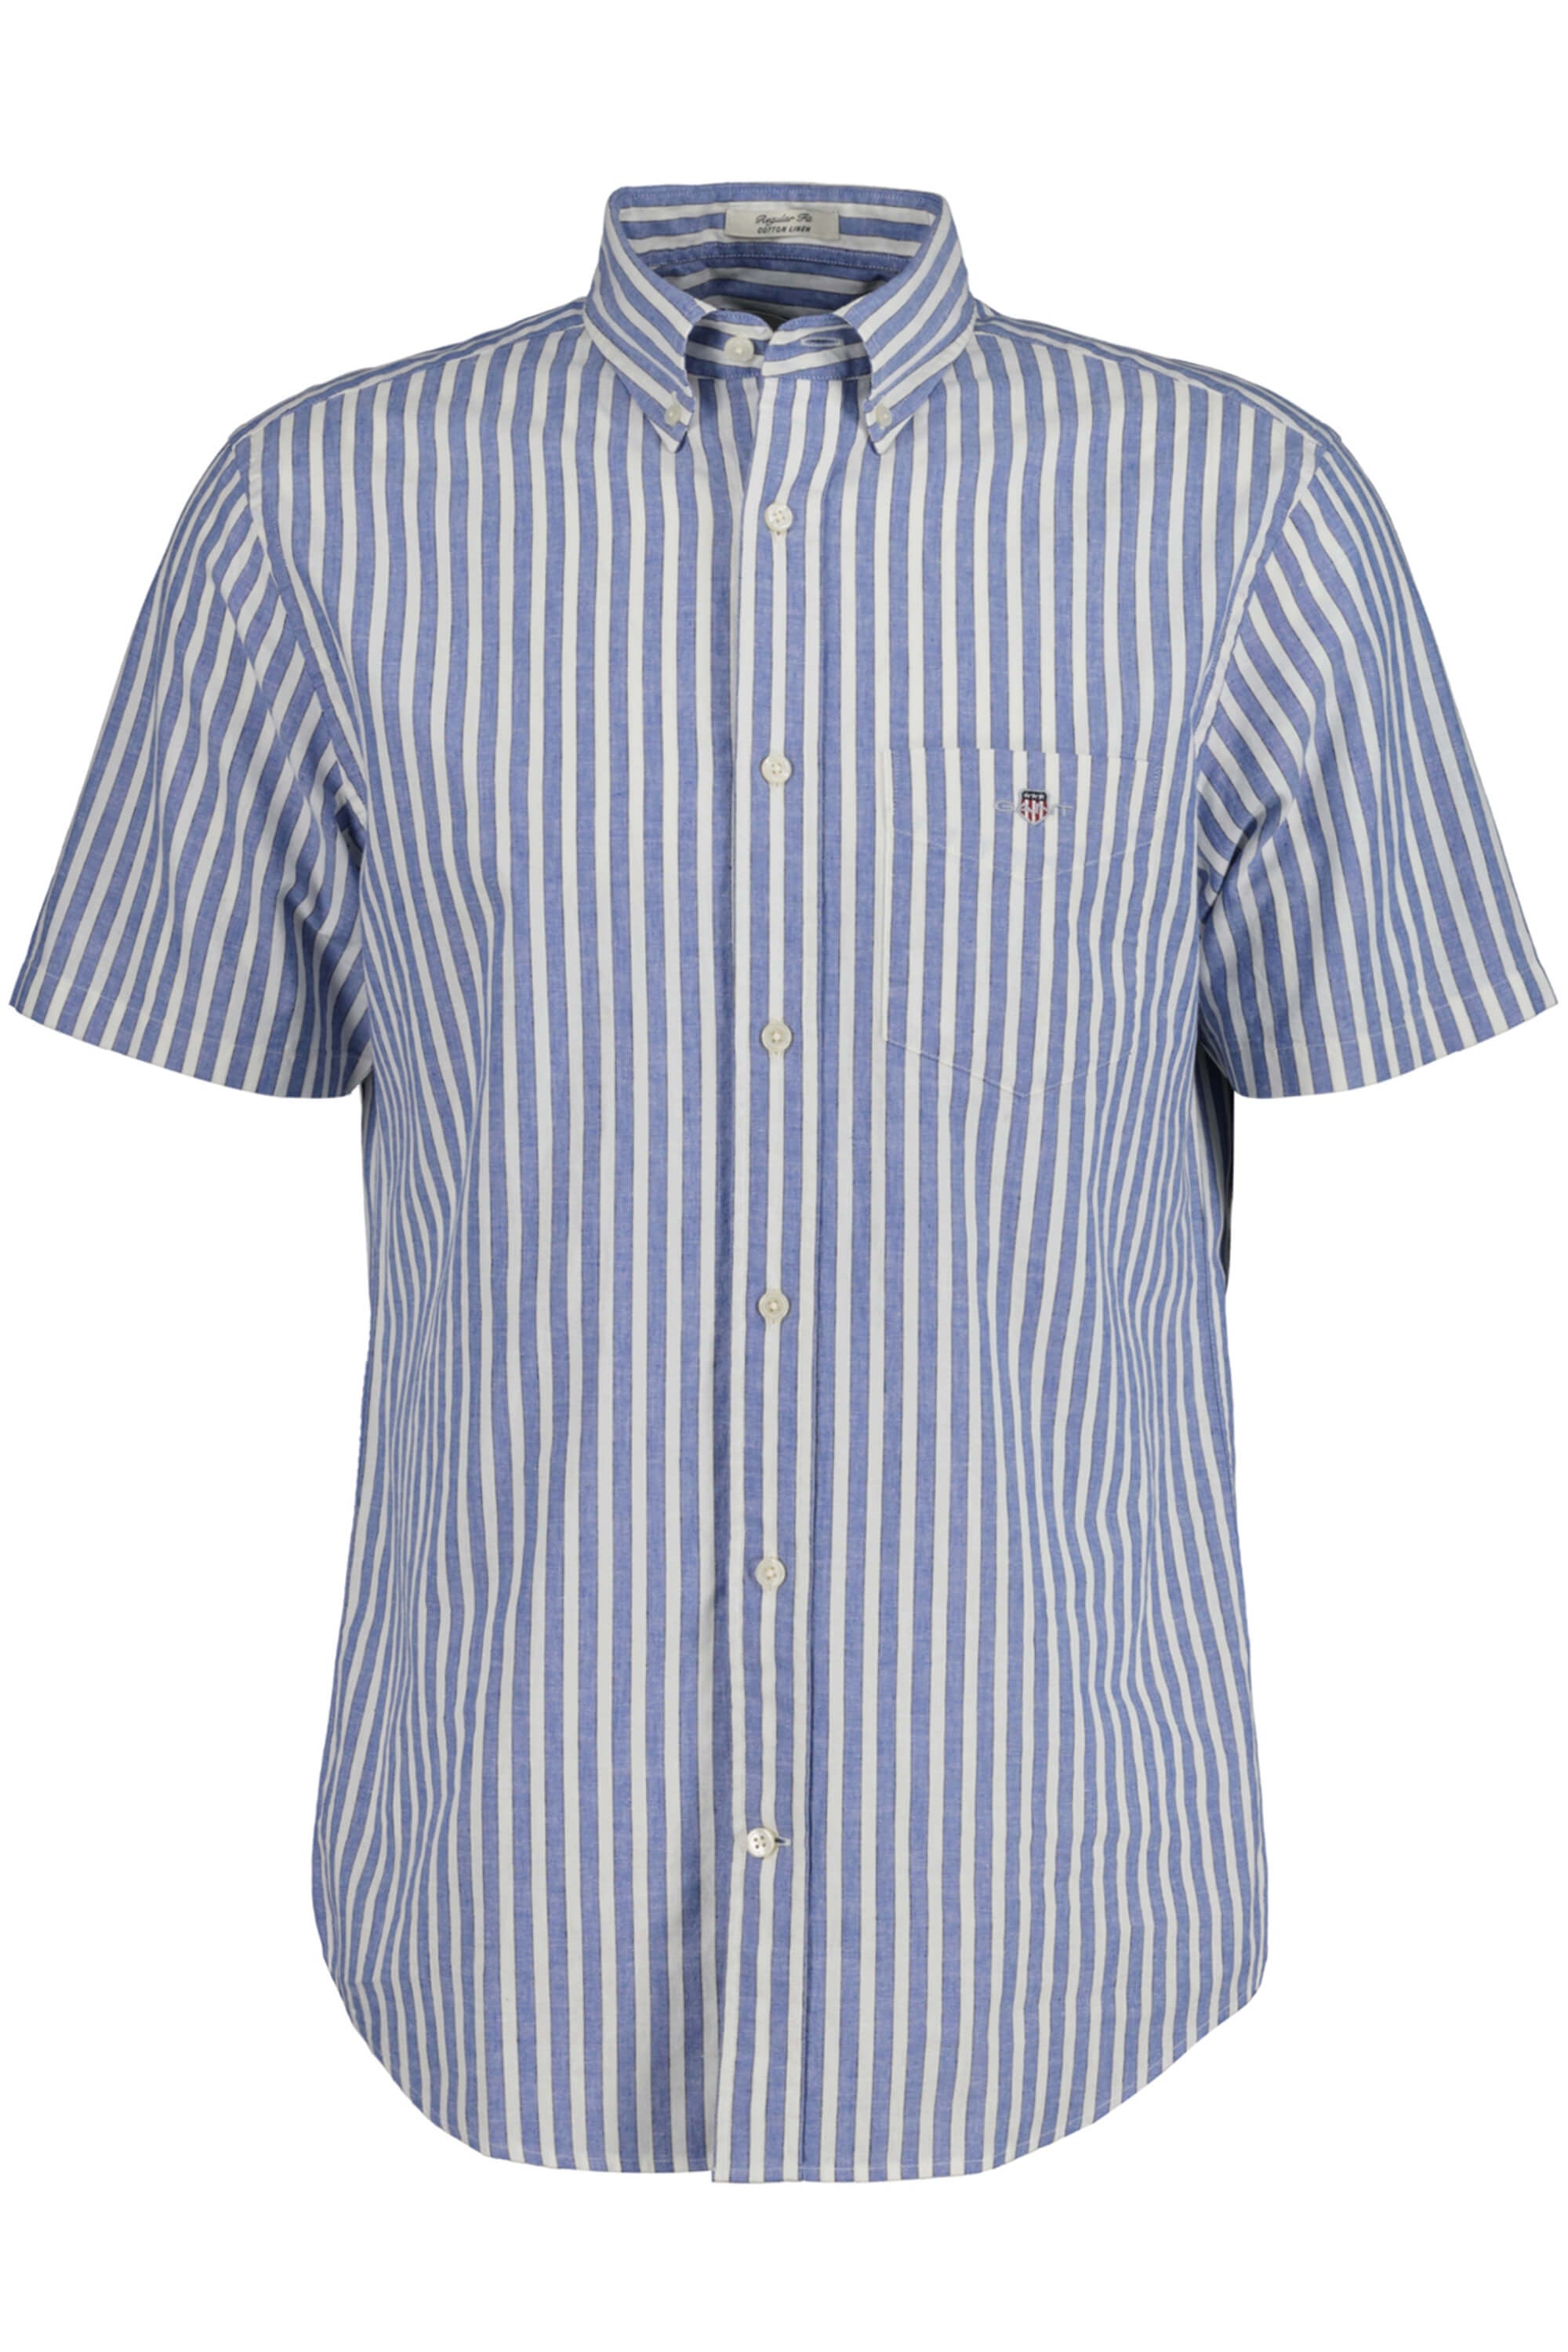 Gant Cotton Linen Stripe Shirt Rich Blue